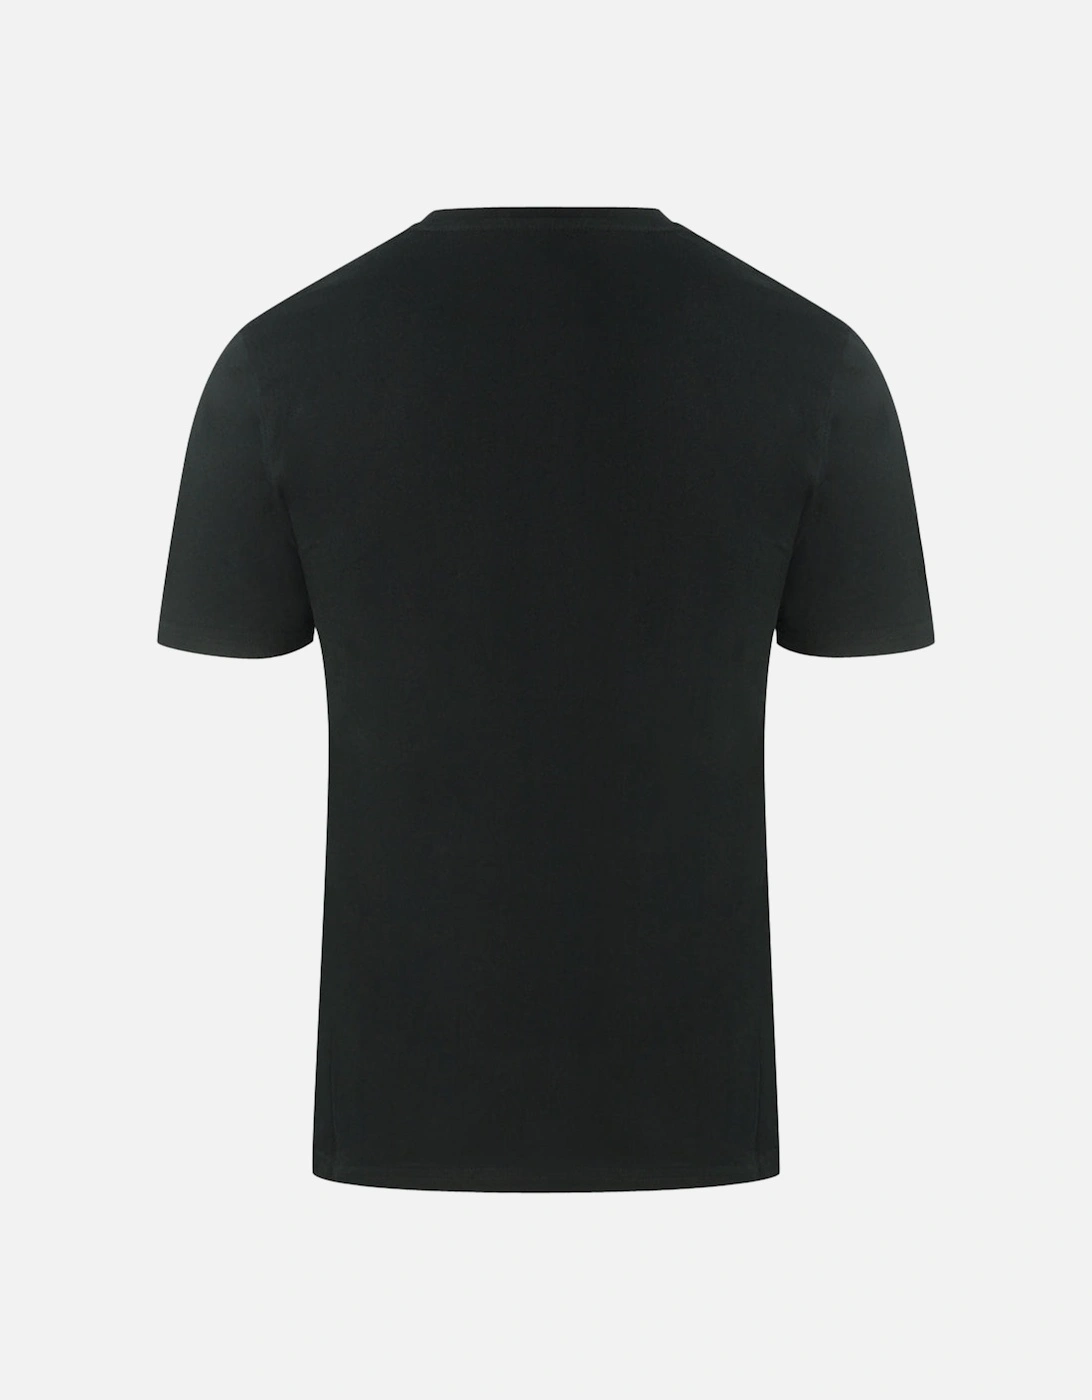 Sailing Team Black T-Shirt